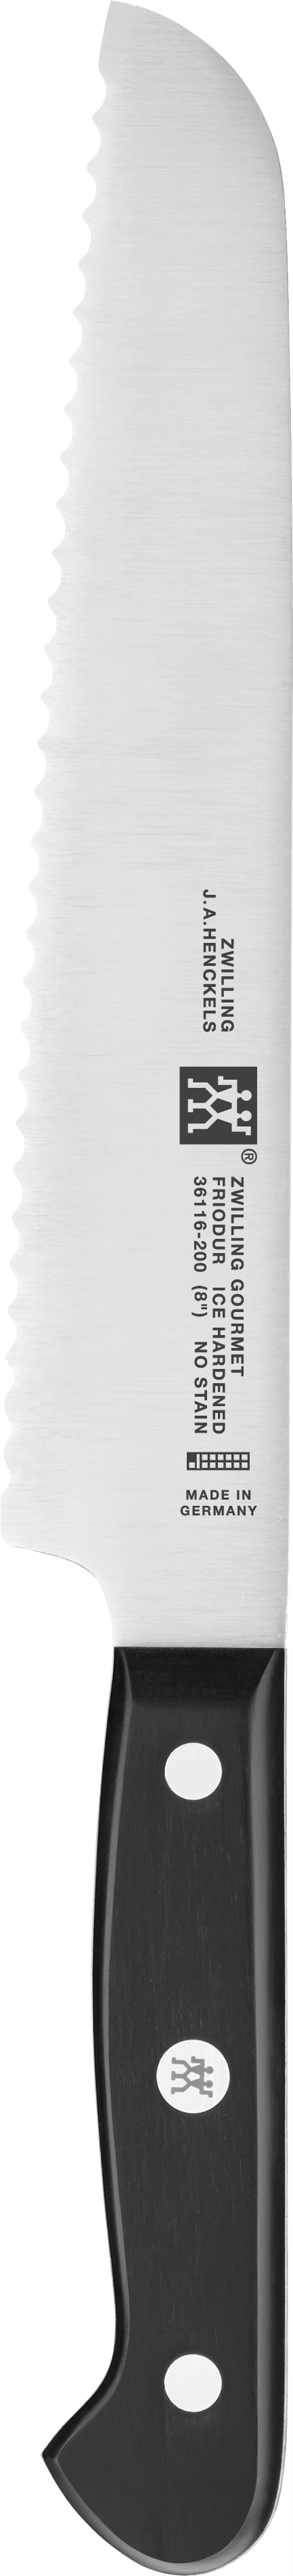 Zwilling Gourmet Brotmesser 20 cm - 36116-201-0